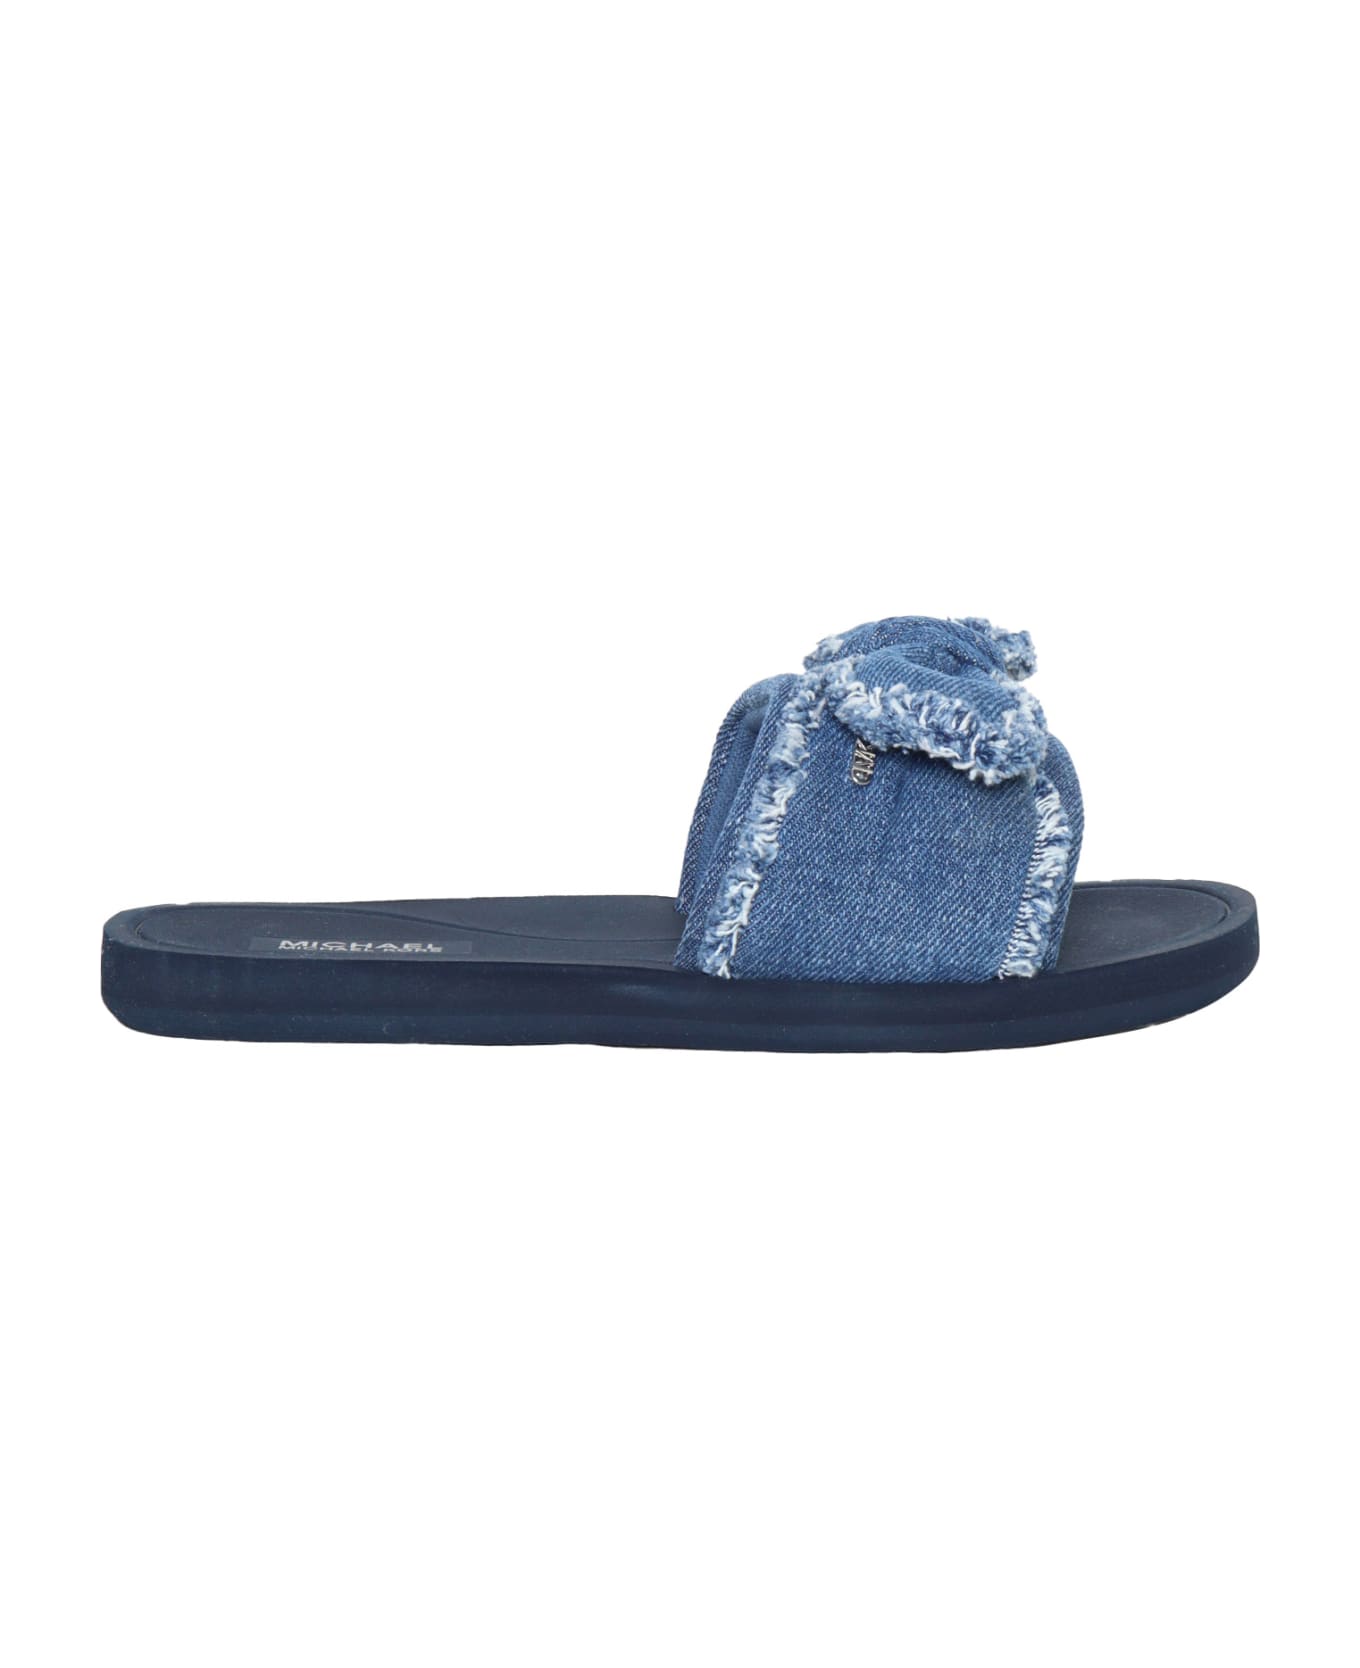 Michael Kors Low Denim Slippers - BLUE